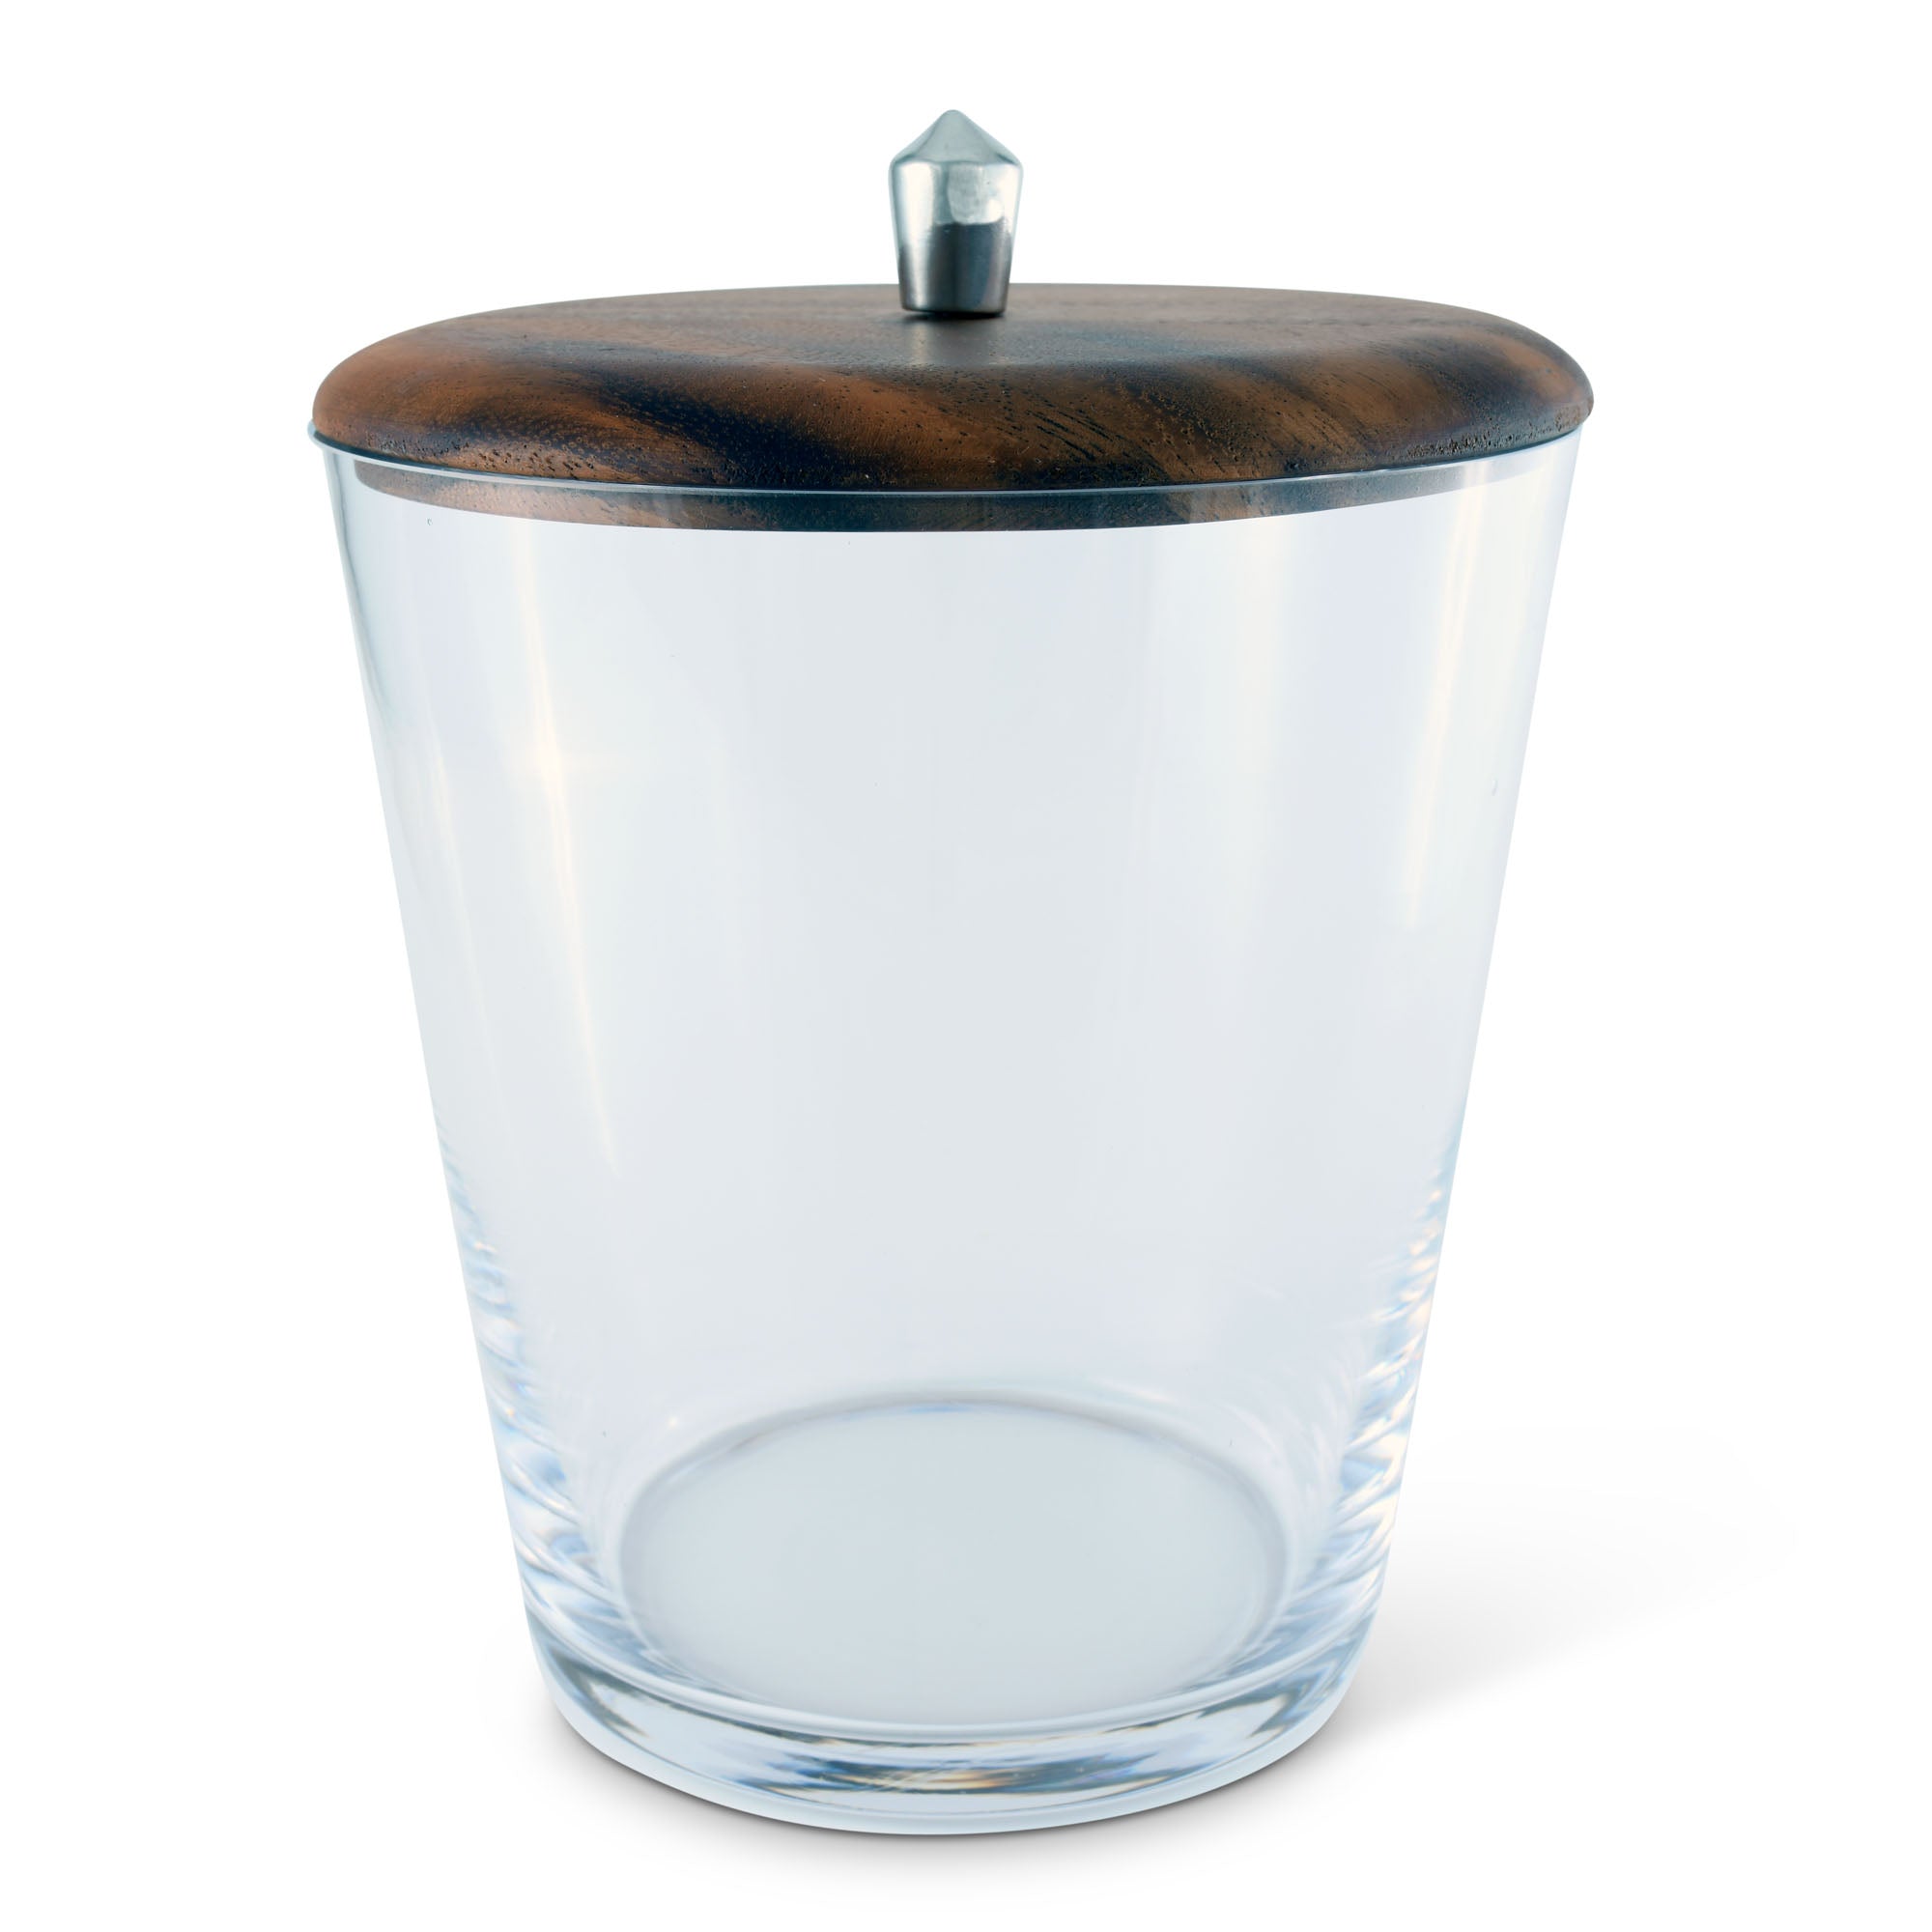 Vagabond House Tribeca Glass Ice Bucket Product Image